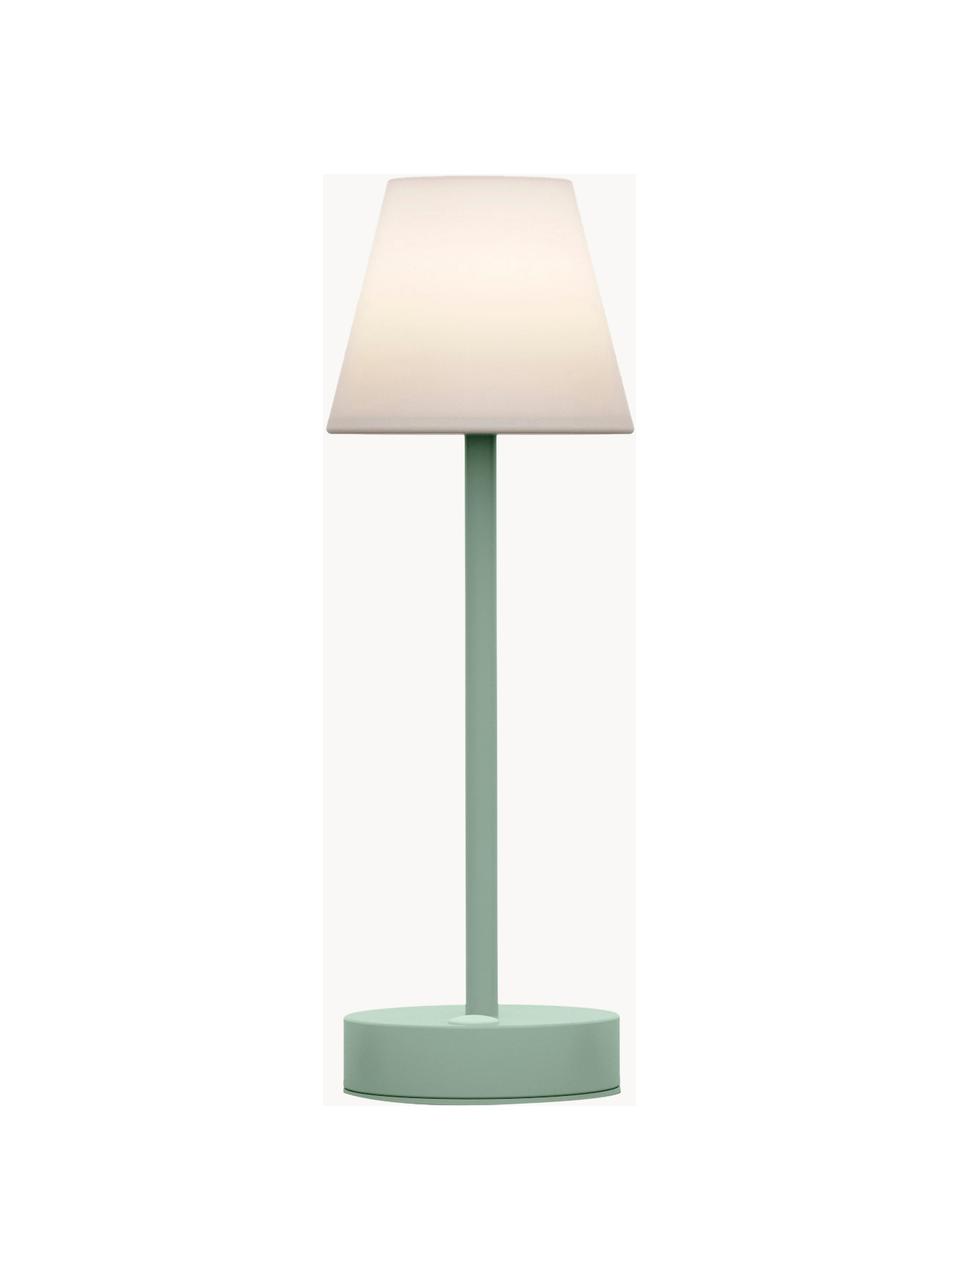 Lampada da tavolo portatile a LED da esterno con funzione touch e luce regolabile Lola, Paralume: polipropilene, Bianco, verde menta, Ø 11 x Alt. 32 cm